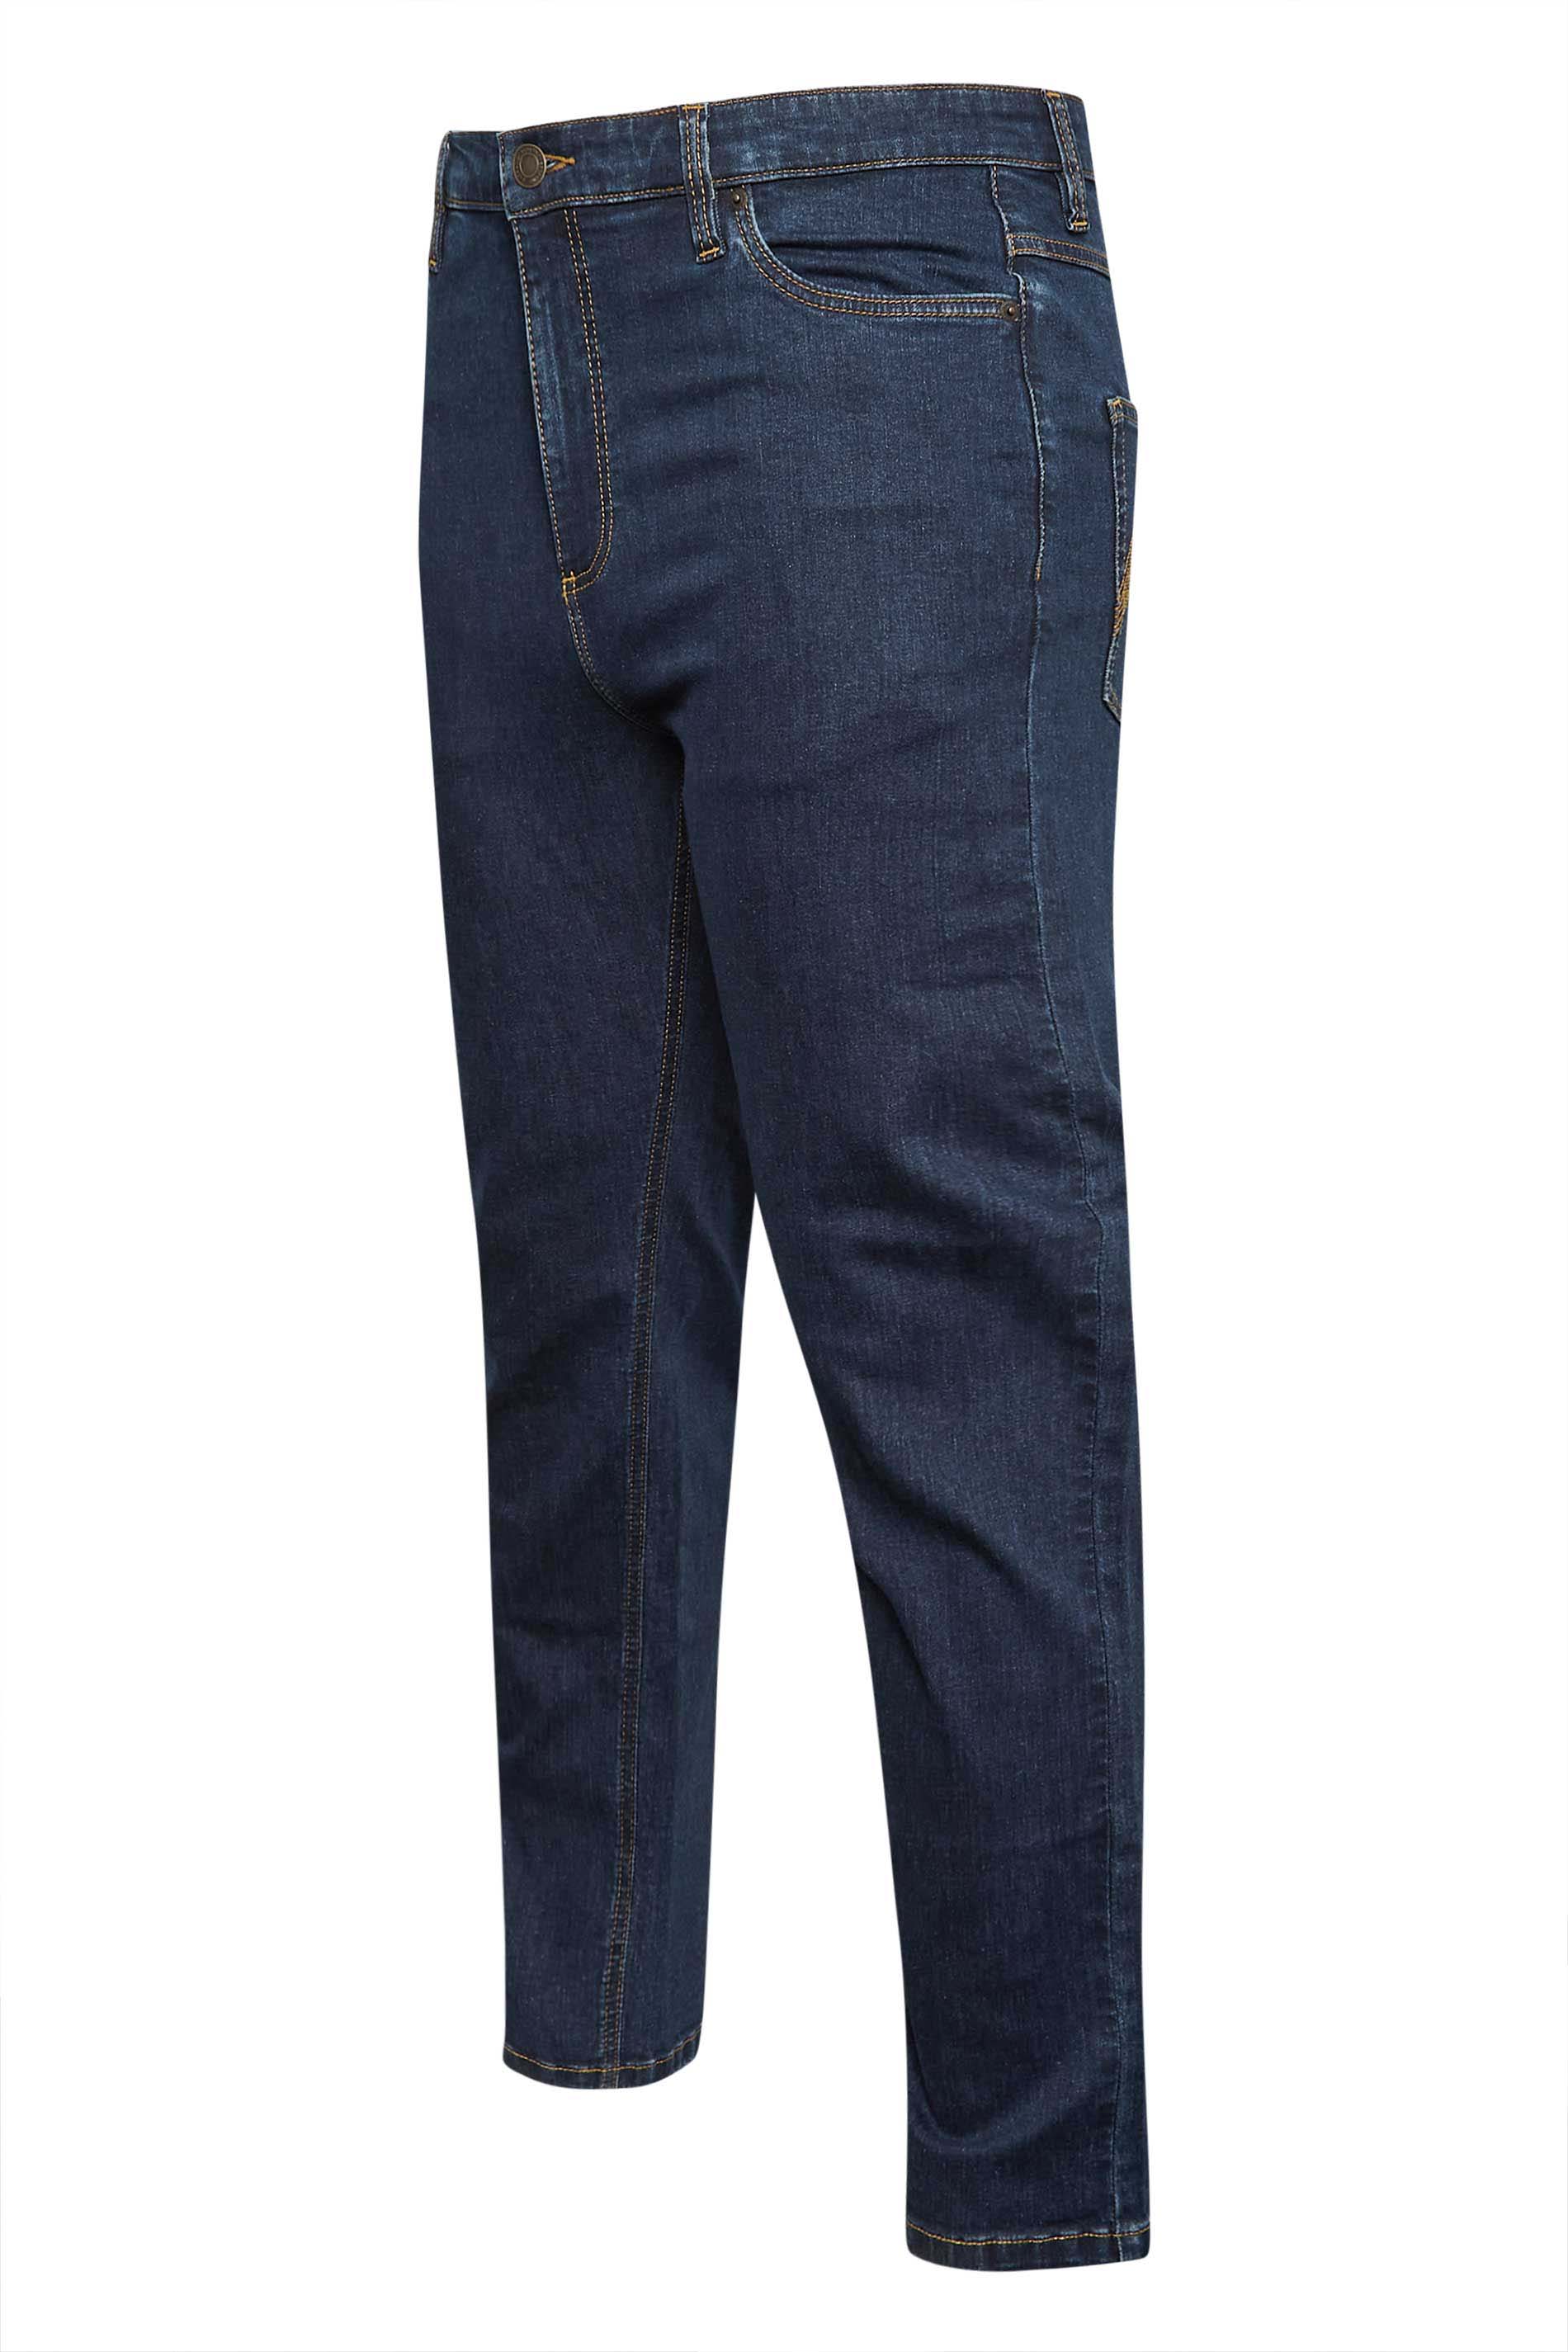 BadRhino Big & Tall Indigo Dark Blue Stretch Jeans | BadRhino 2